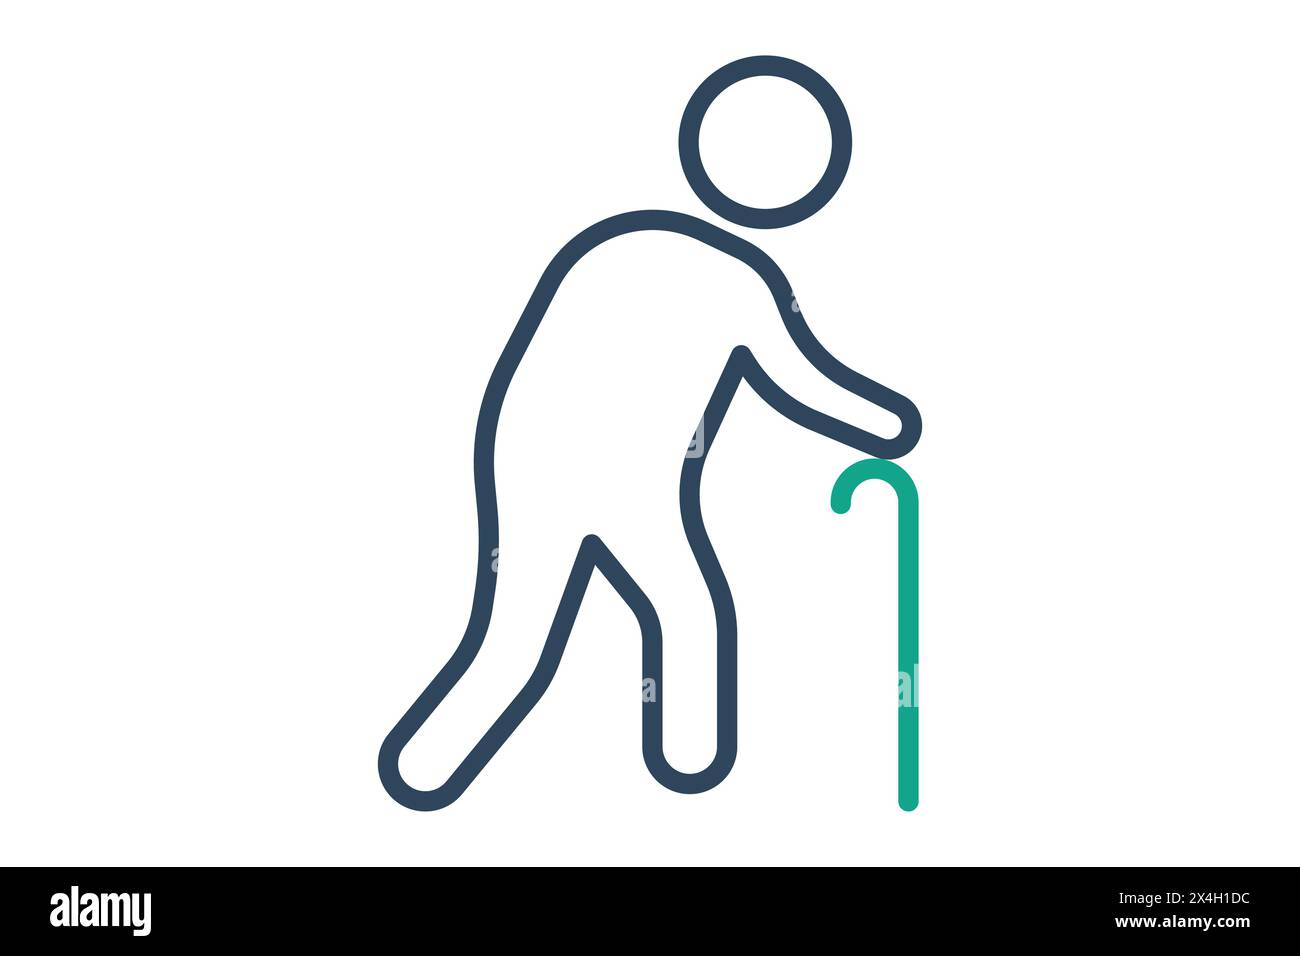 elderly icon. elderly people use walking sticks. line icon style. old age element illustration Stock Vector